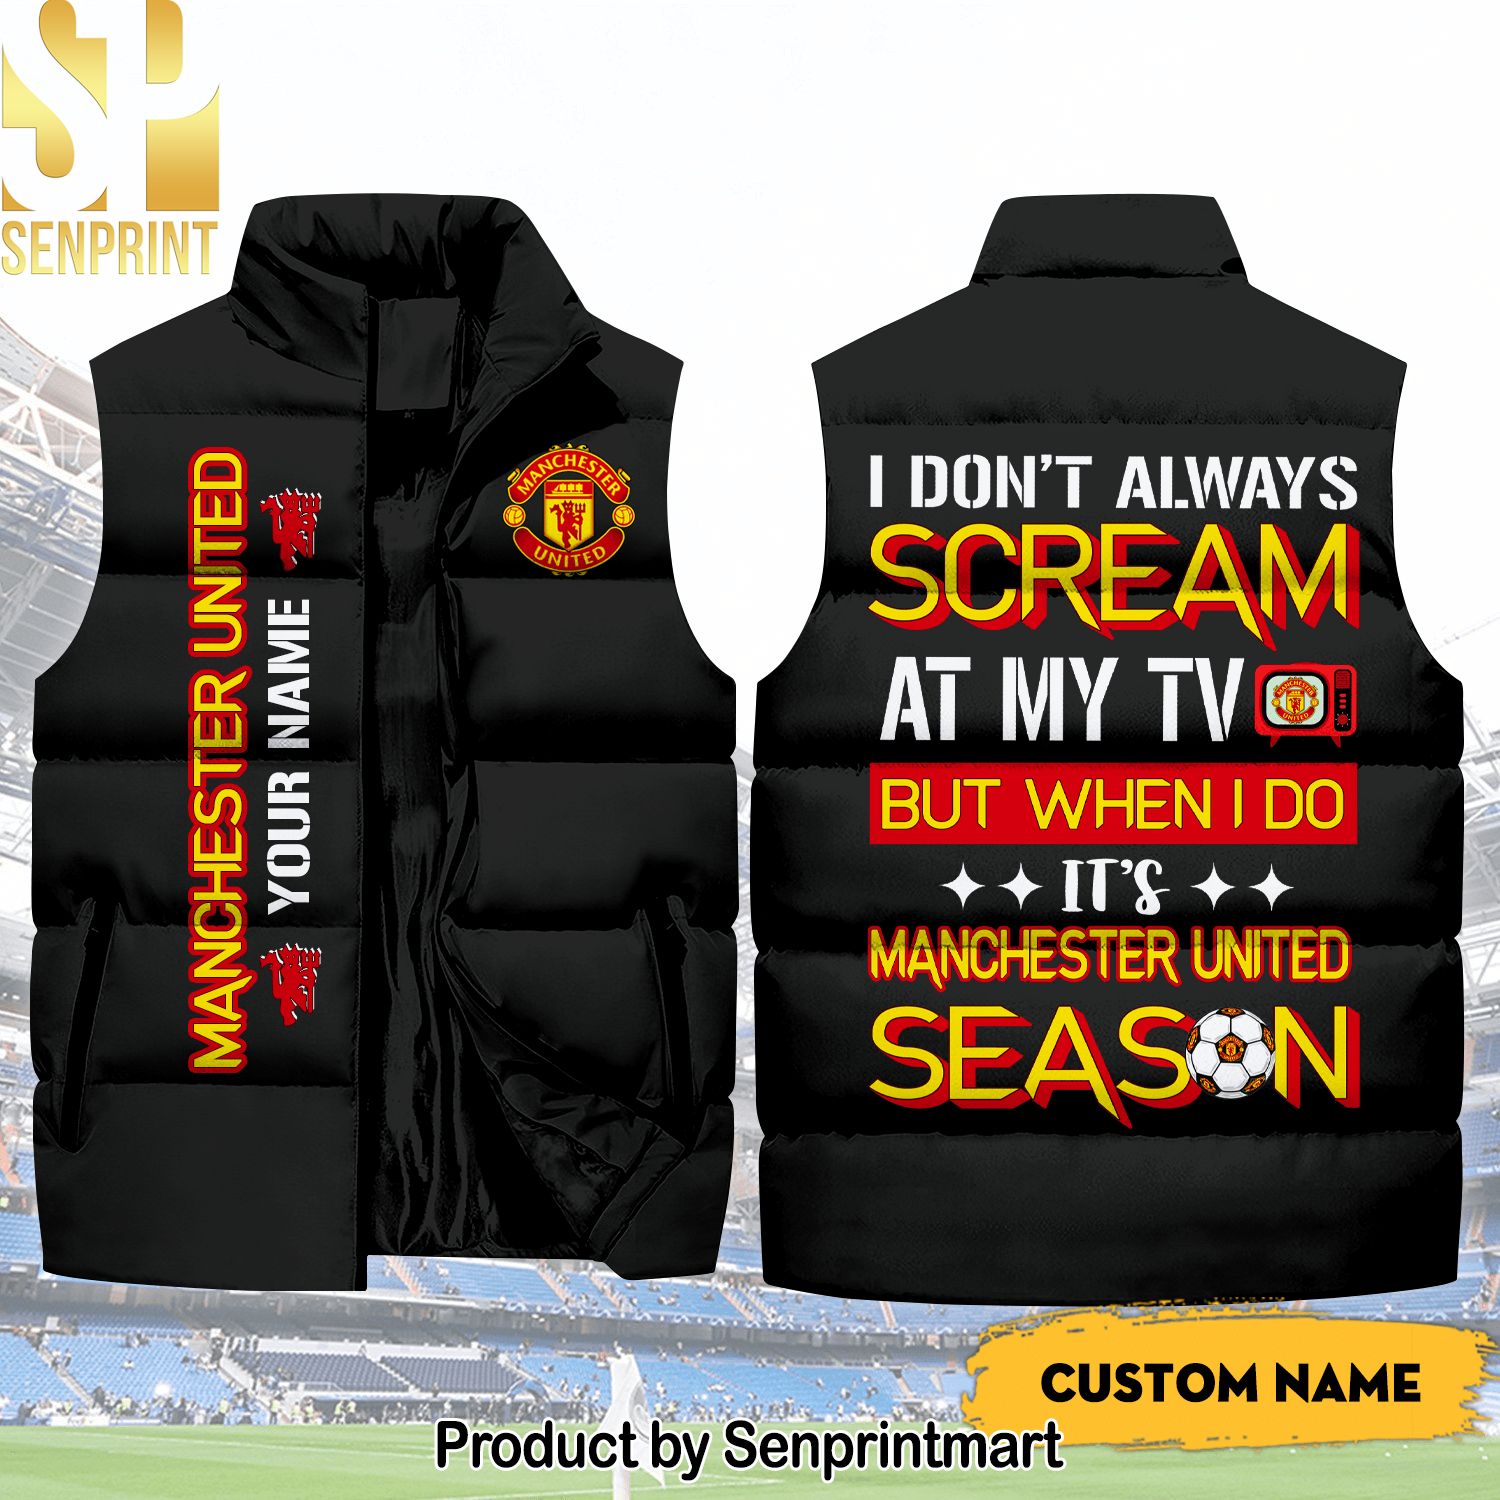 English Premier League Manchester United Season Hypebeast Fashion Sleeveless Jacket